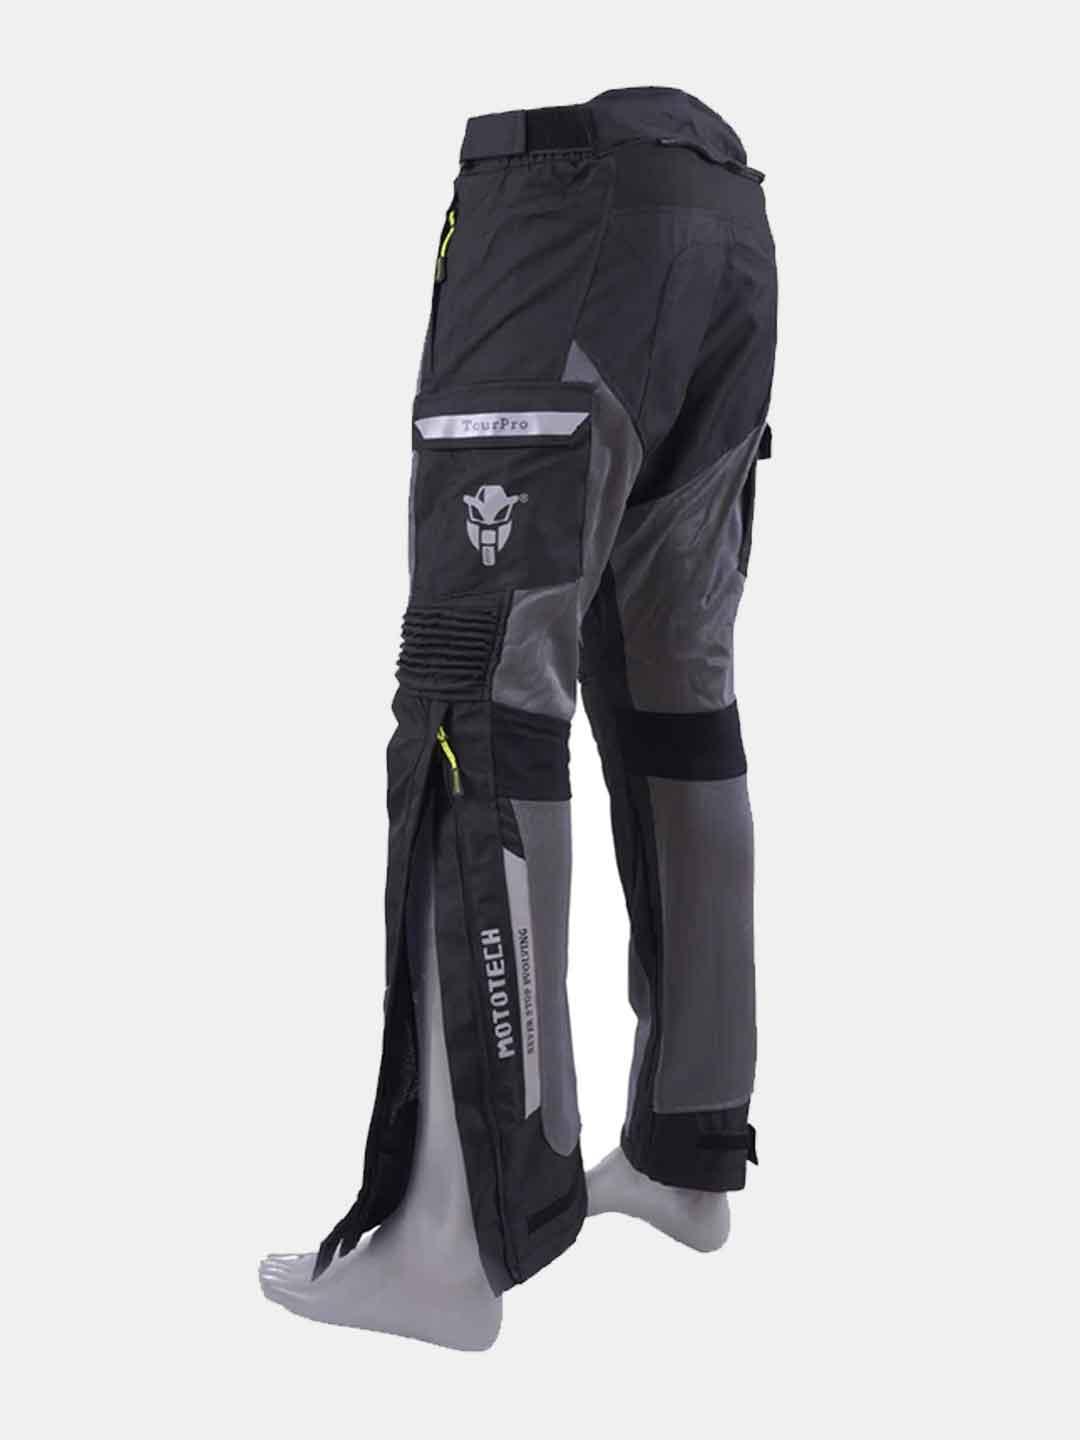 Mototech Aero TourPro Riding Pants -Level 2 Black Grey - Moto Modz